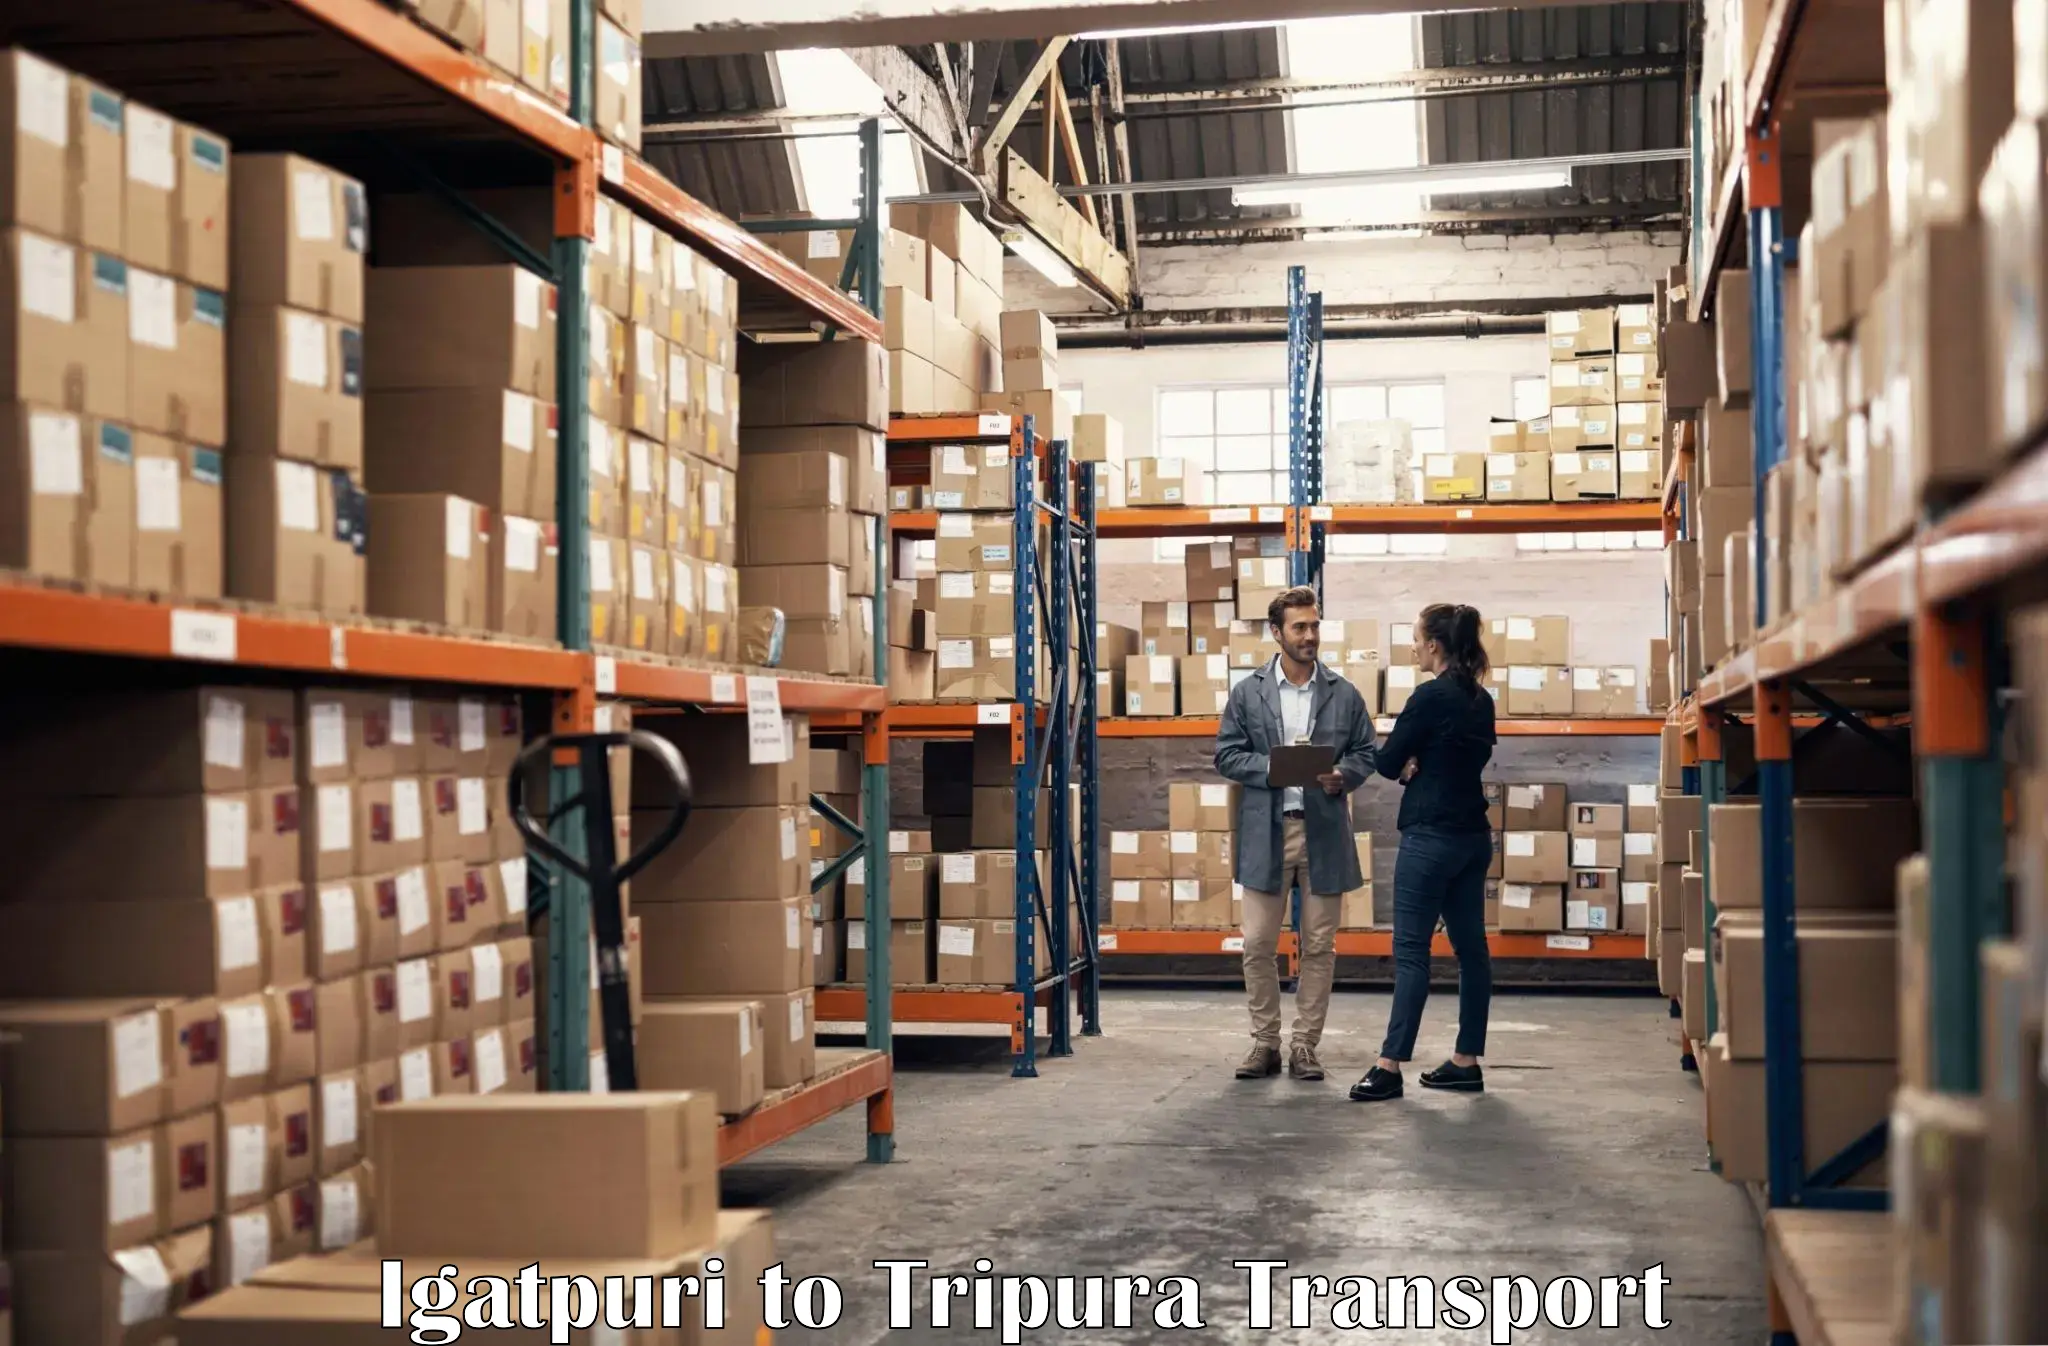 Furniture transport service in Igatpuri to Udaipur Tripura